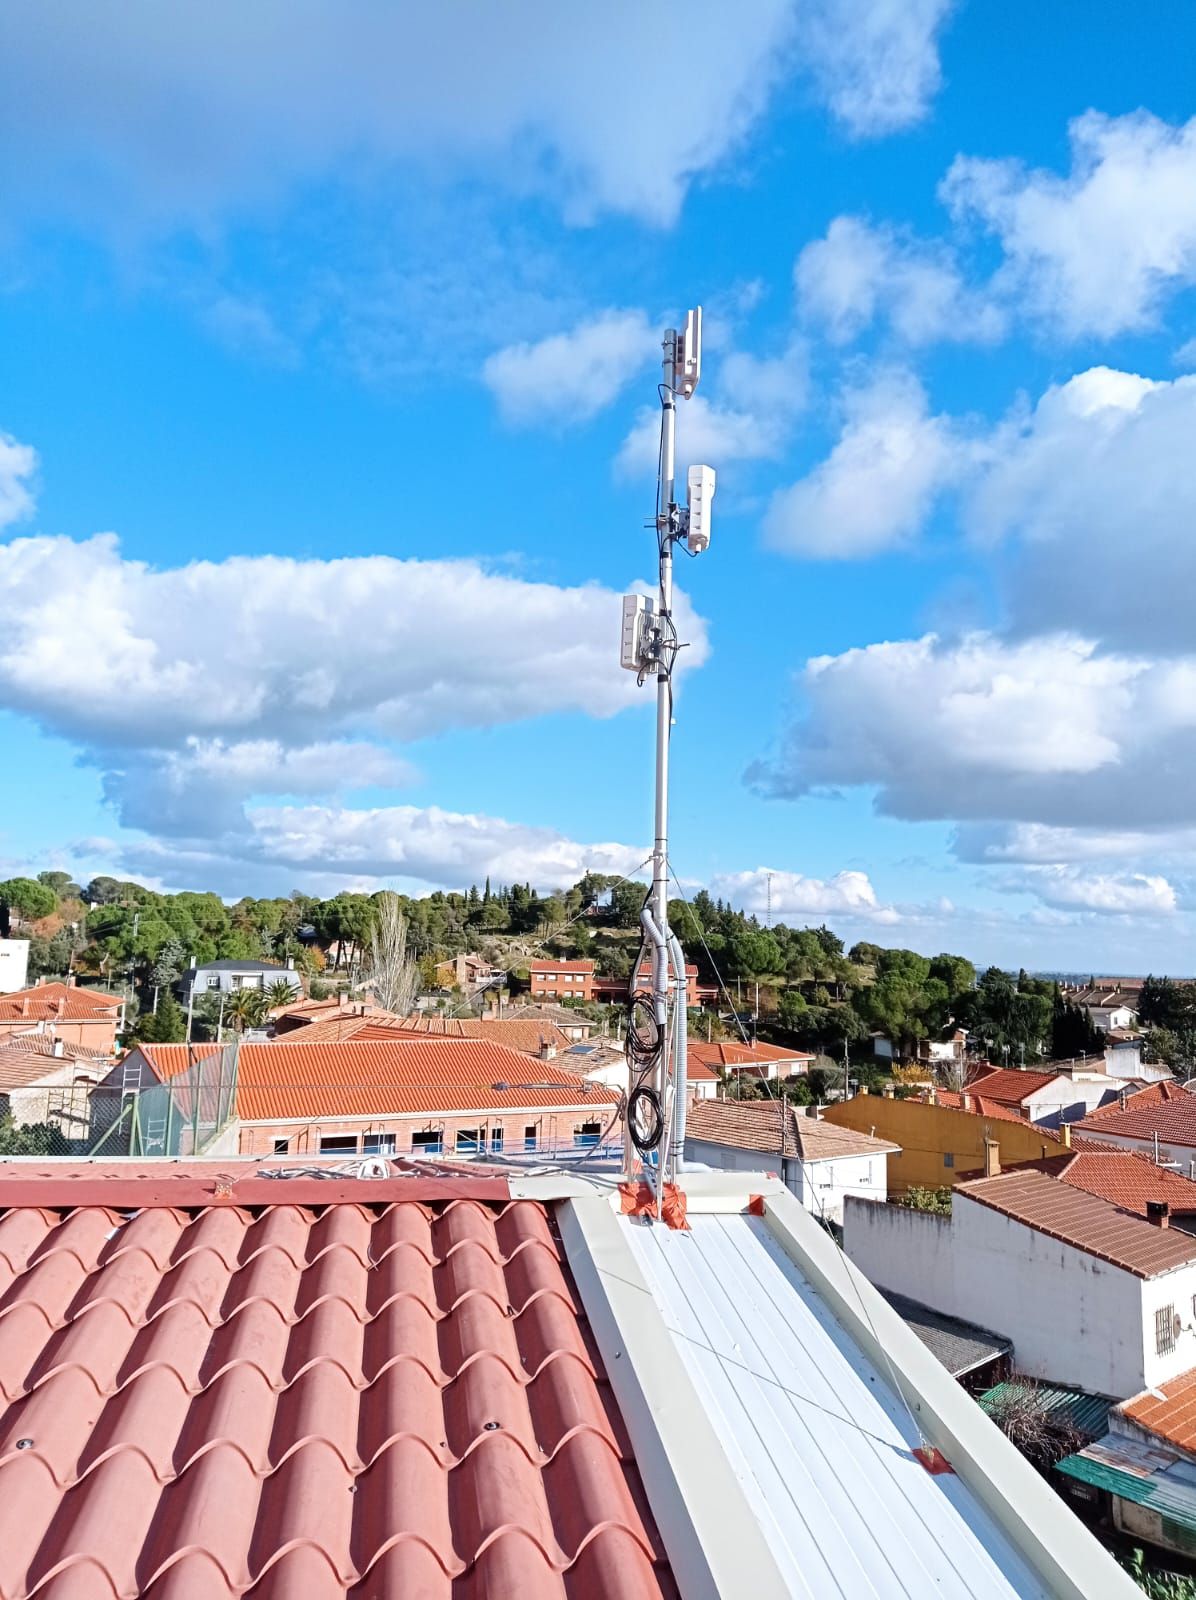 Bluetel Wifi lleva Internet donde no llega la fibra en la Sierra de Guadarrama